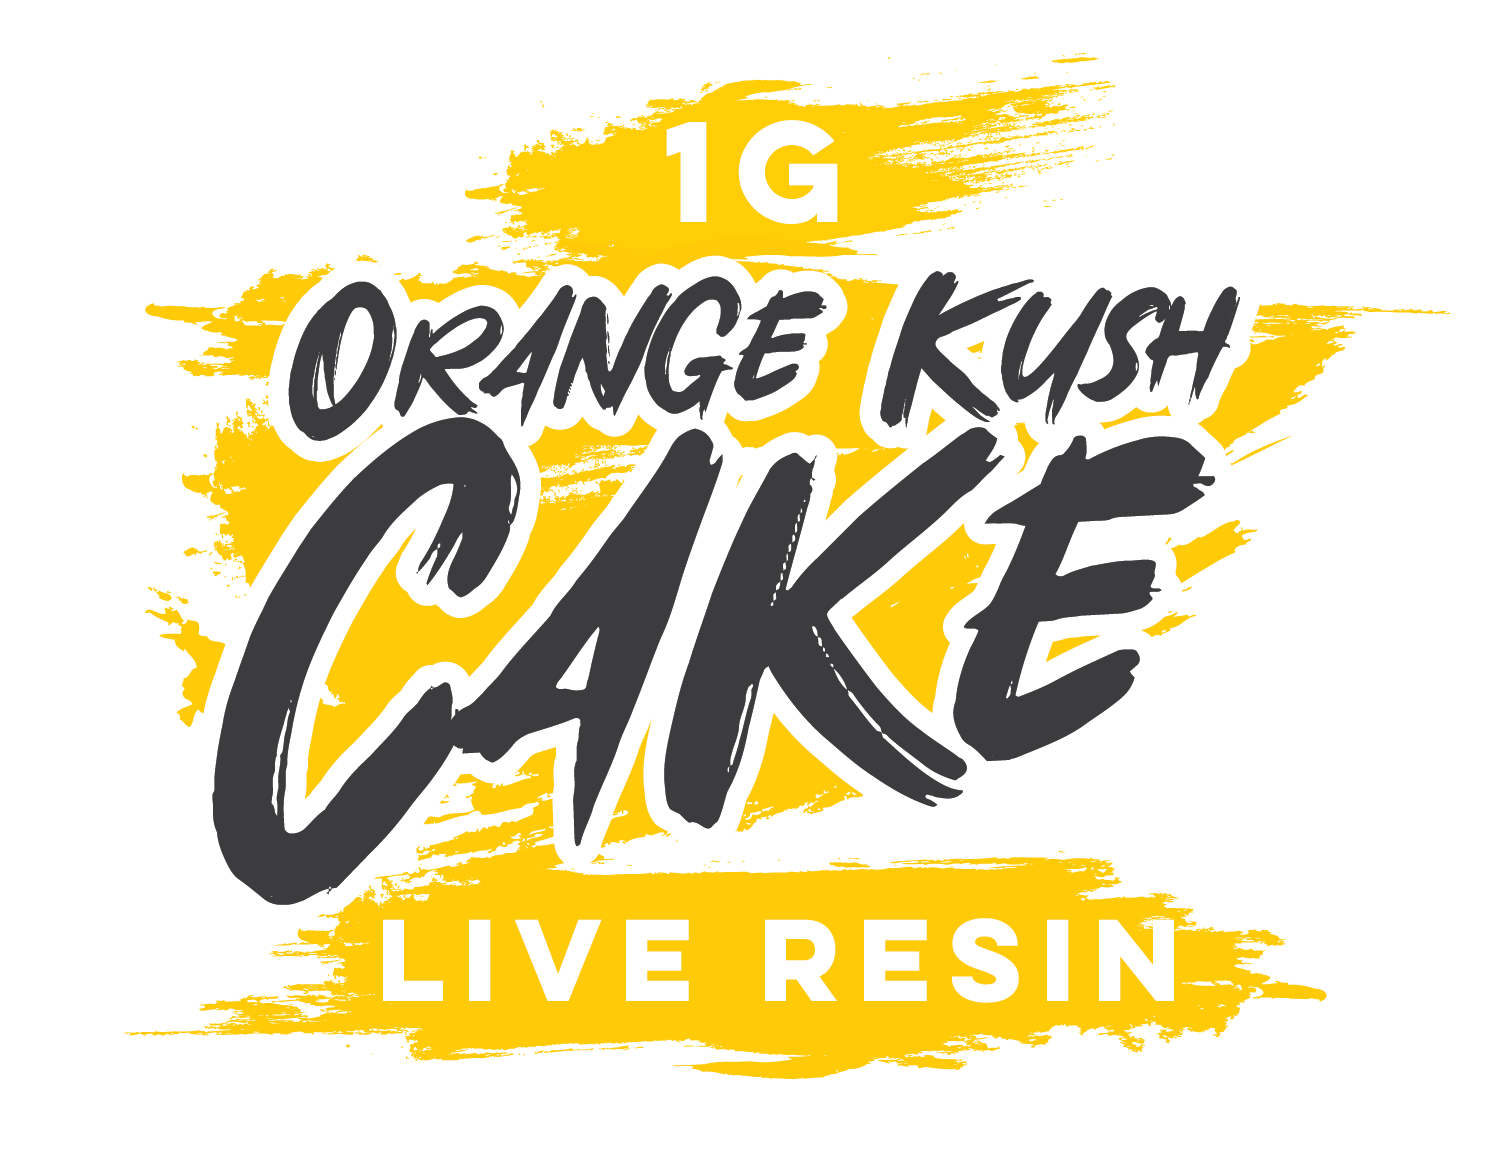 GREAZY Orange Kush Cake Live Resin